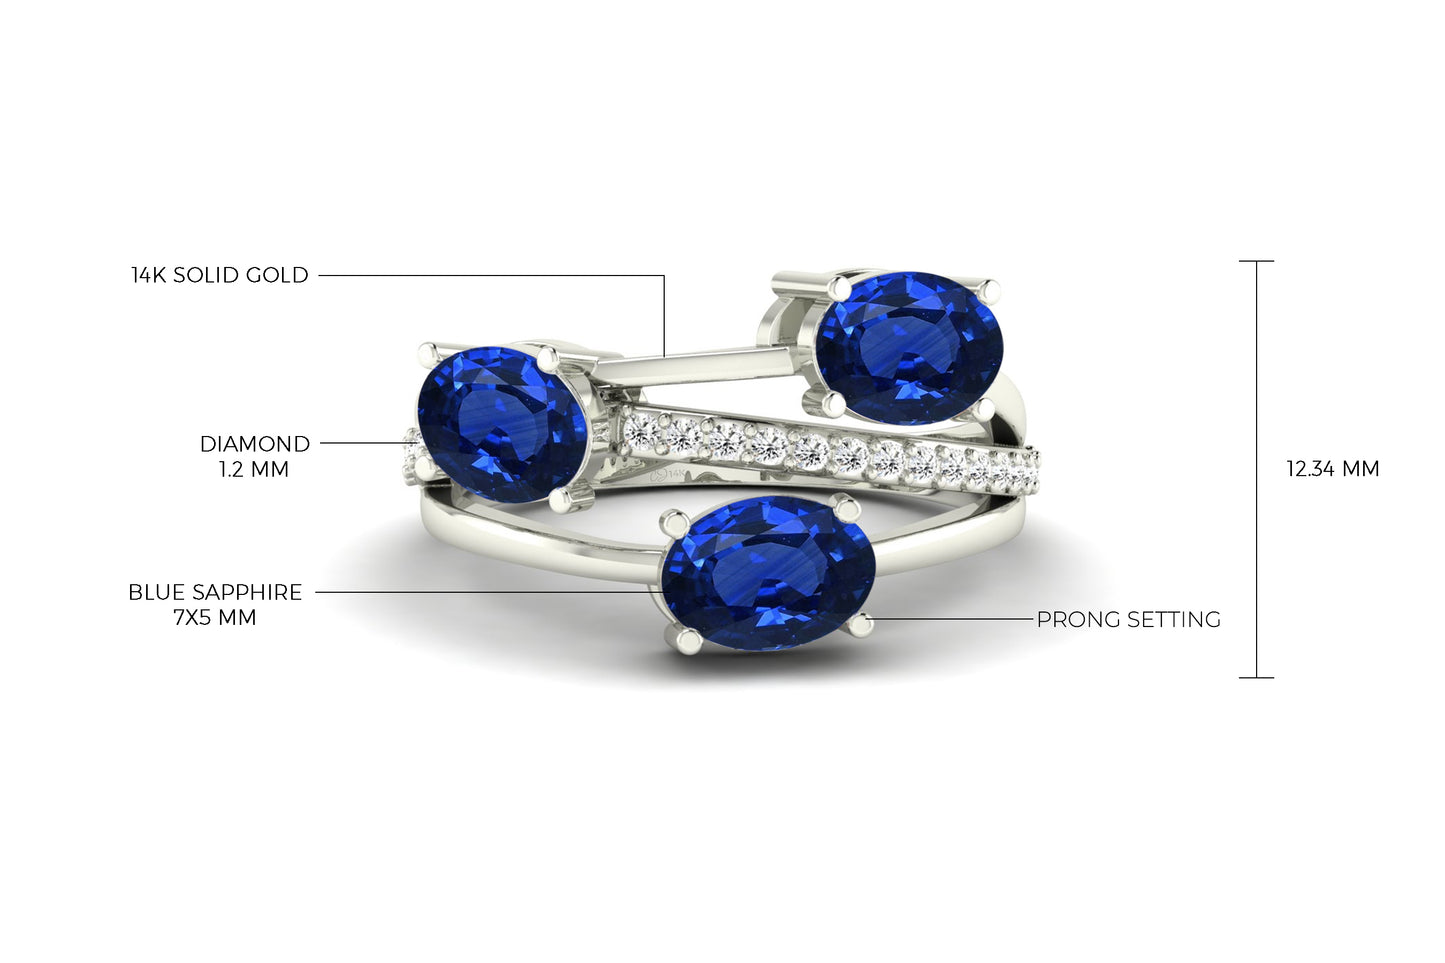 Diamond and Genuine Blue Sapphire Ring